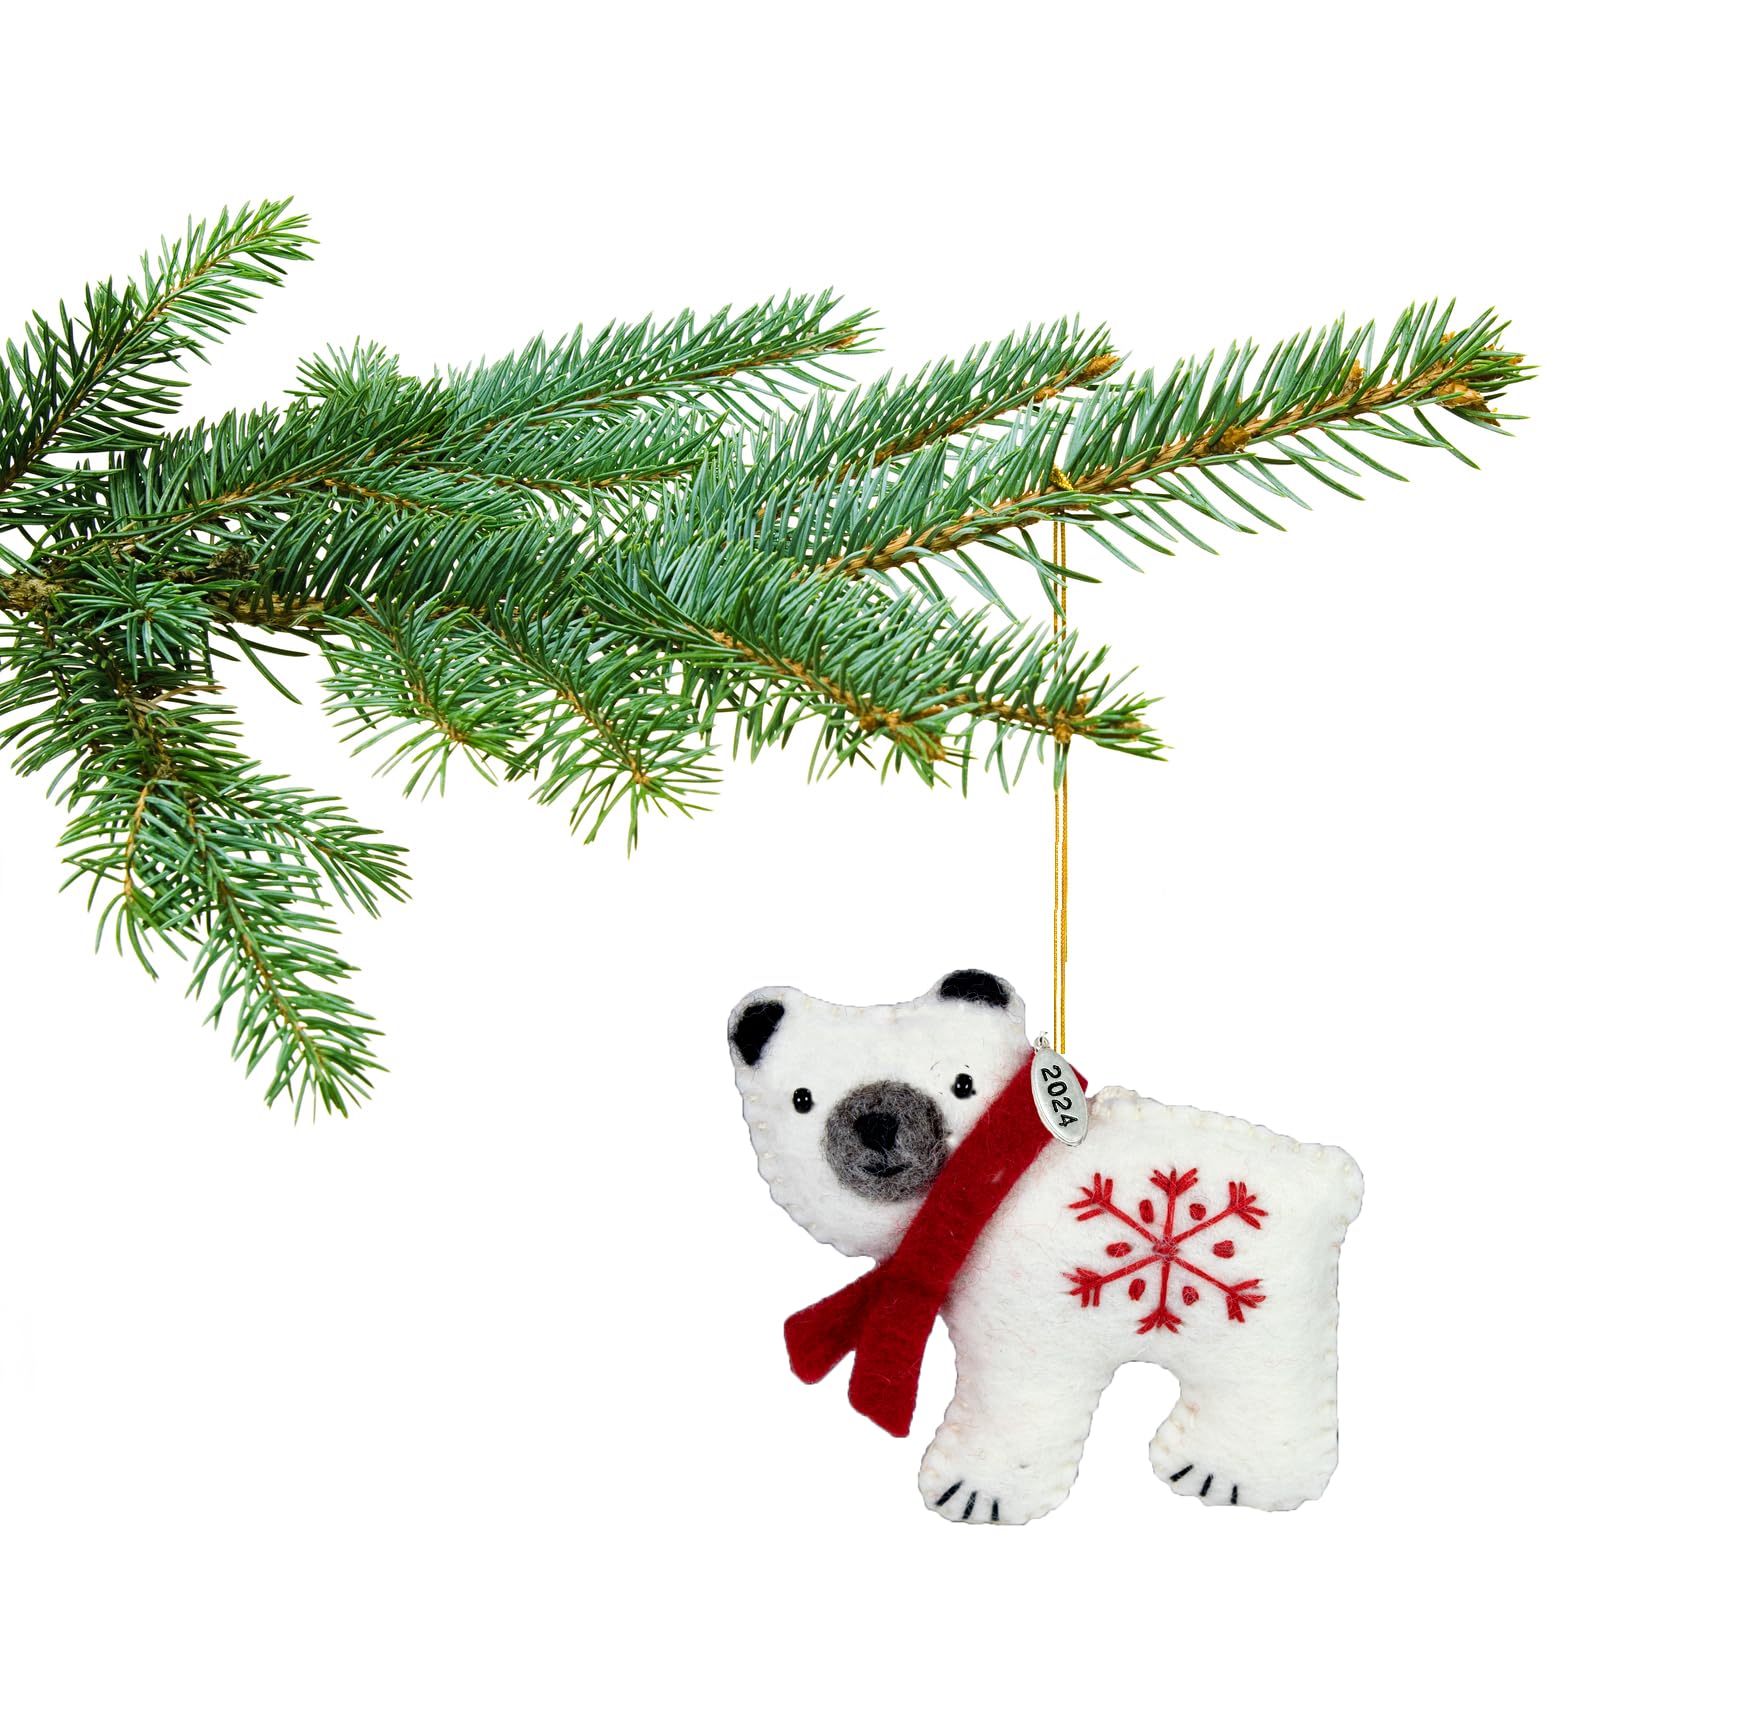 Cute Polar Bear Gifts, Felt Polar Bear Ornament, 2024 Fair Trade Christmas Ornament, Hand Felted Made in Nepal - Comes in a Gift Box